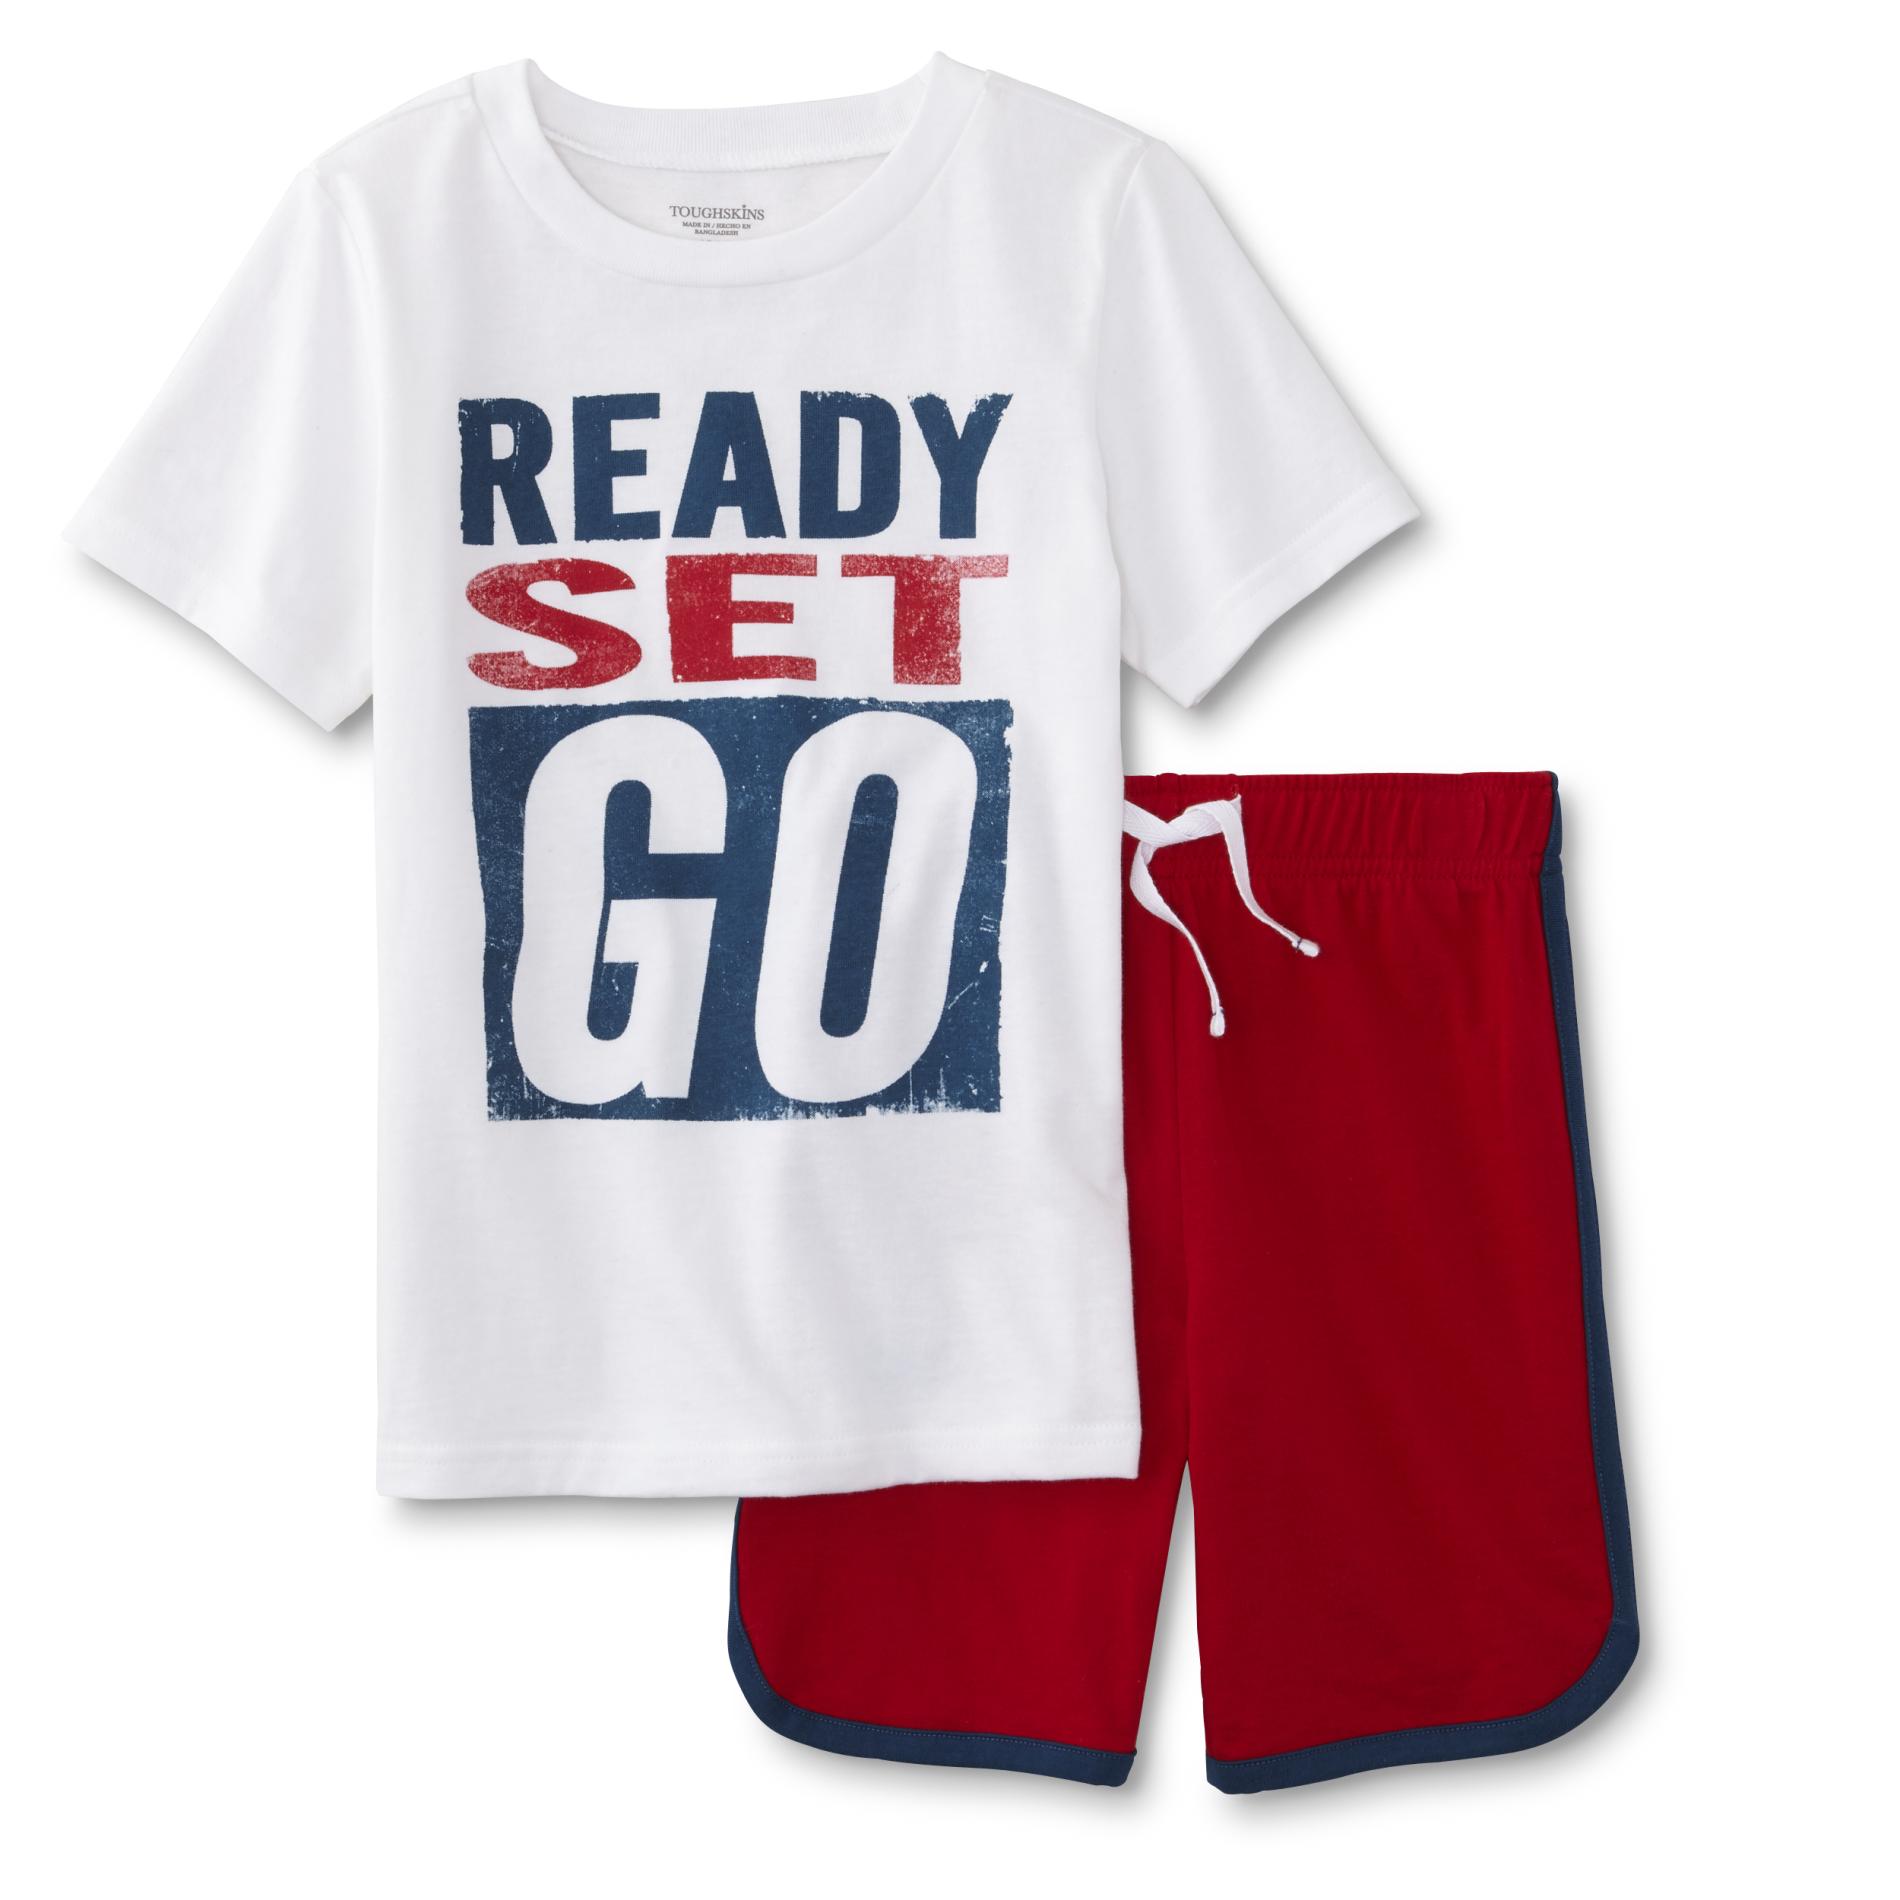 Toughskins Boys' Graphic T-Shirt & Shorts - Ready Set Go